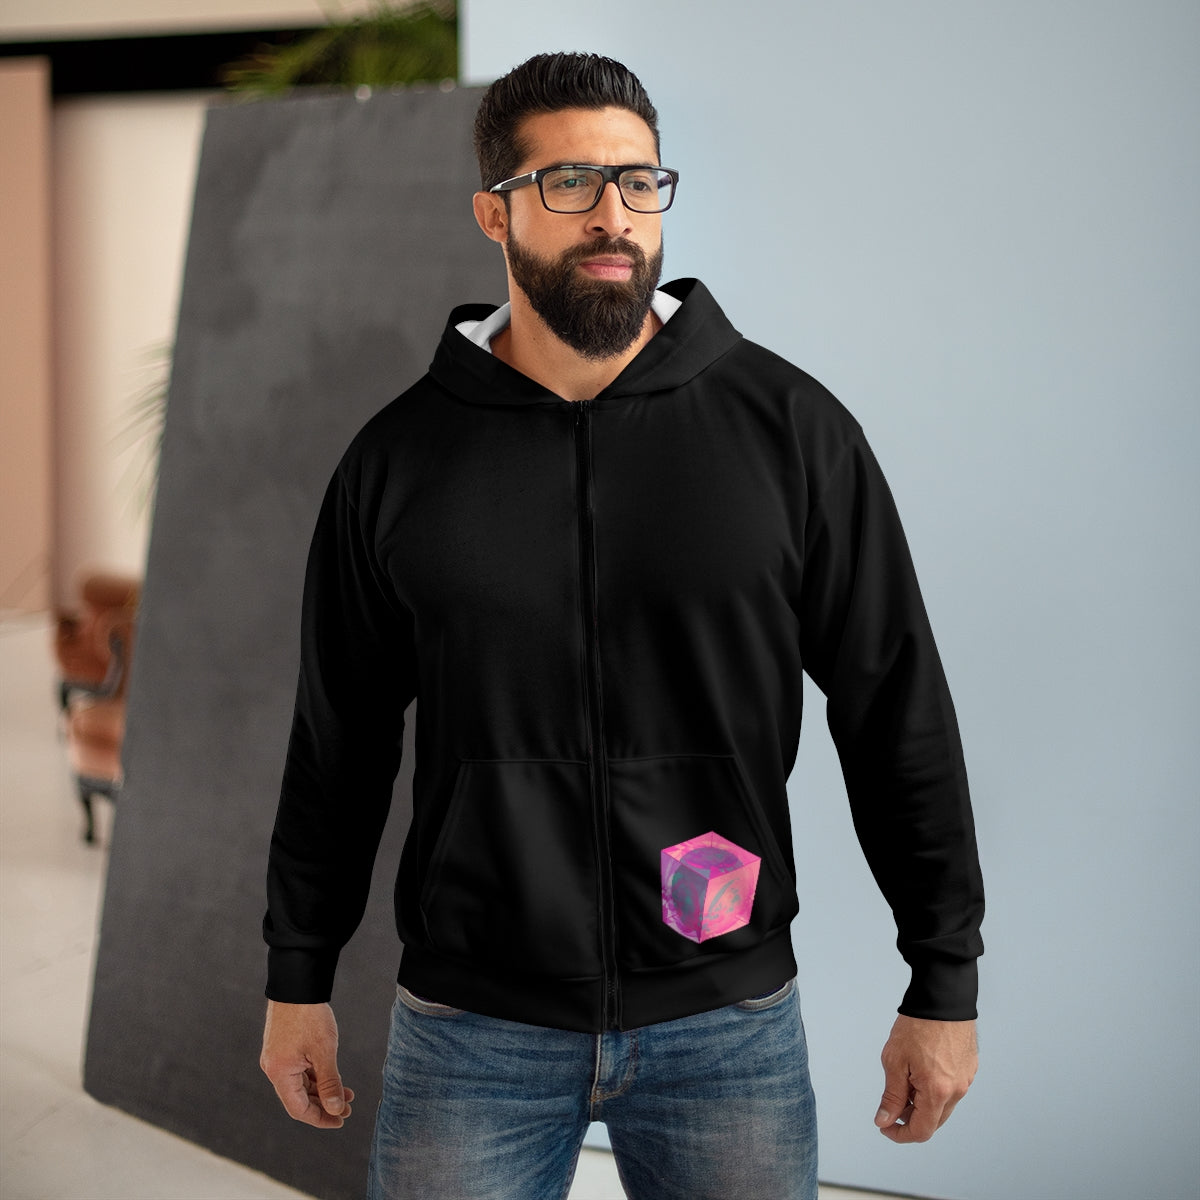 Flowersquare pink Unisex zip hoodie